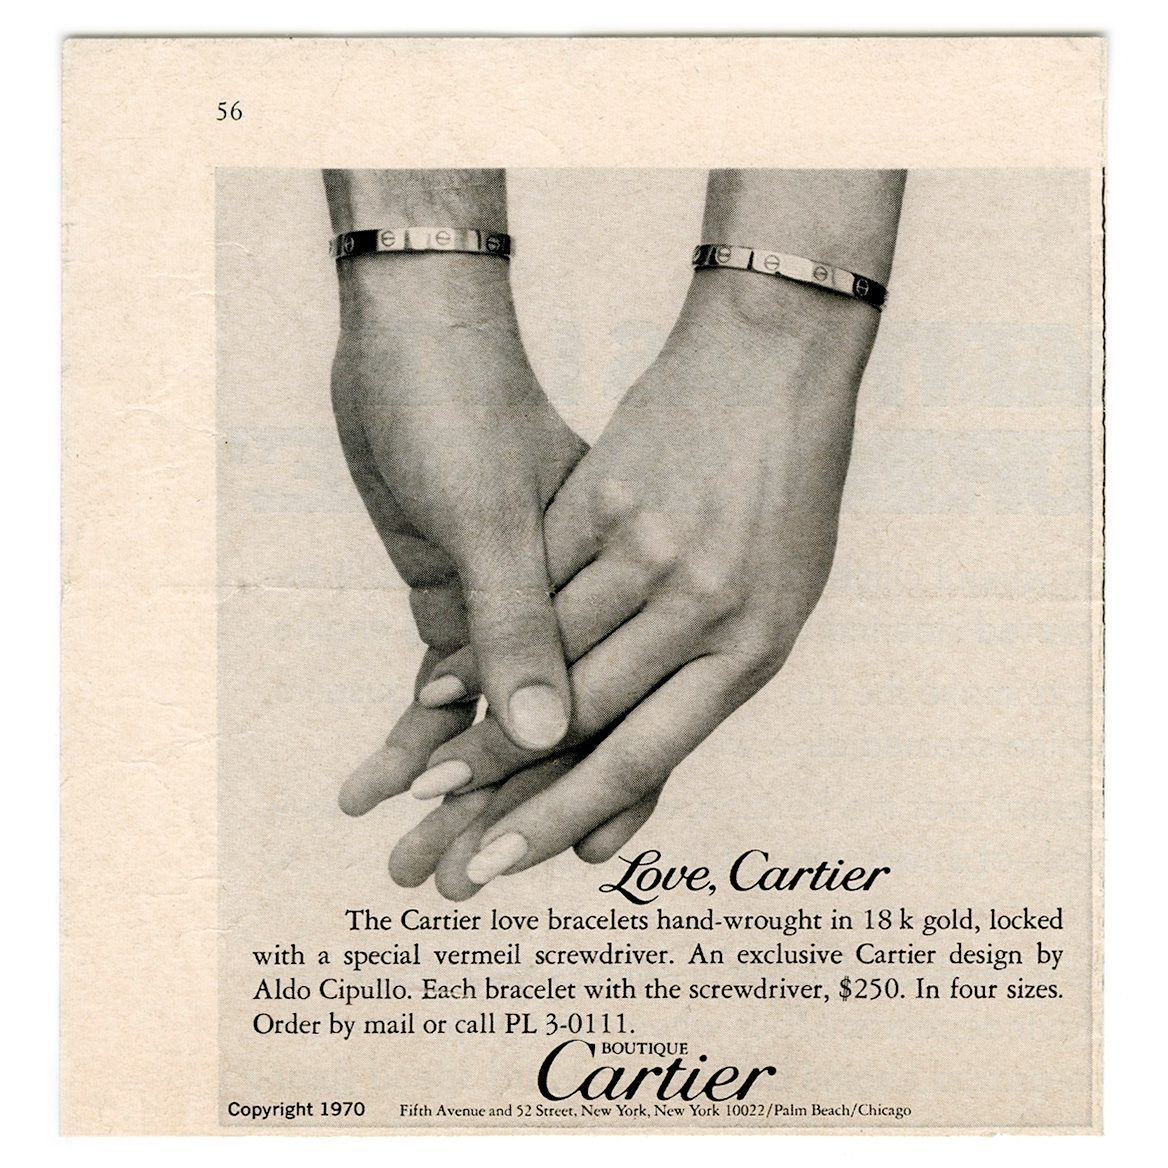 History of the Cartier Love Bracelet